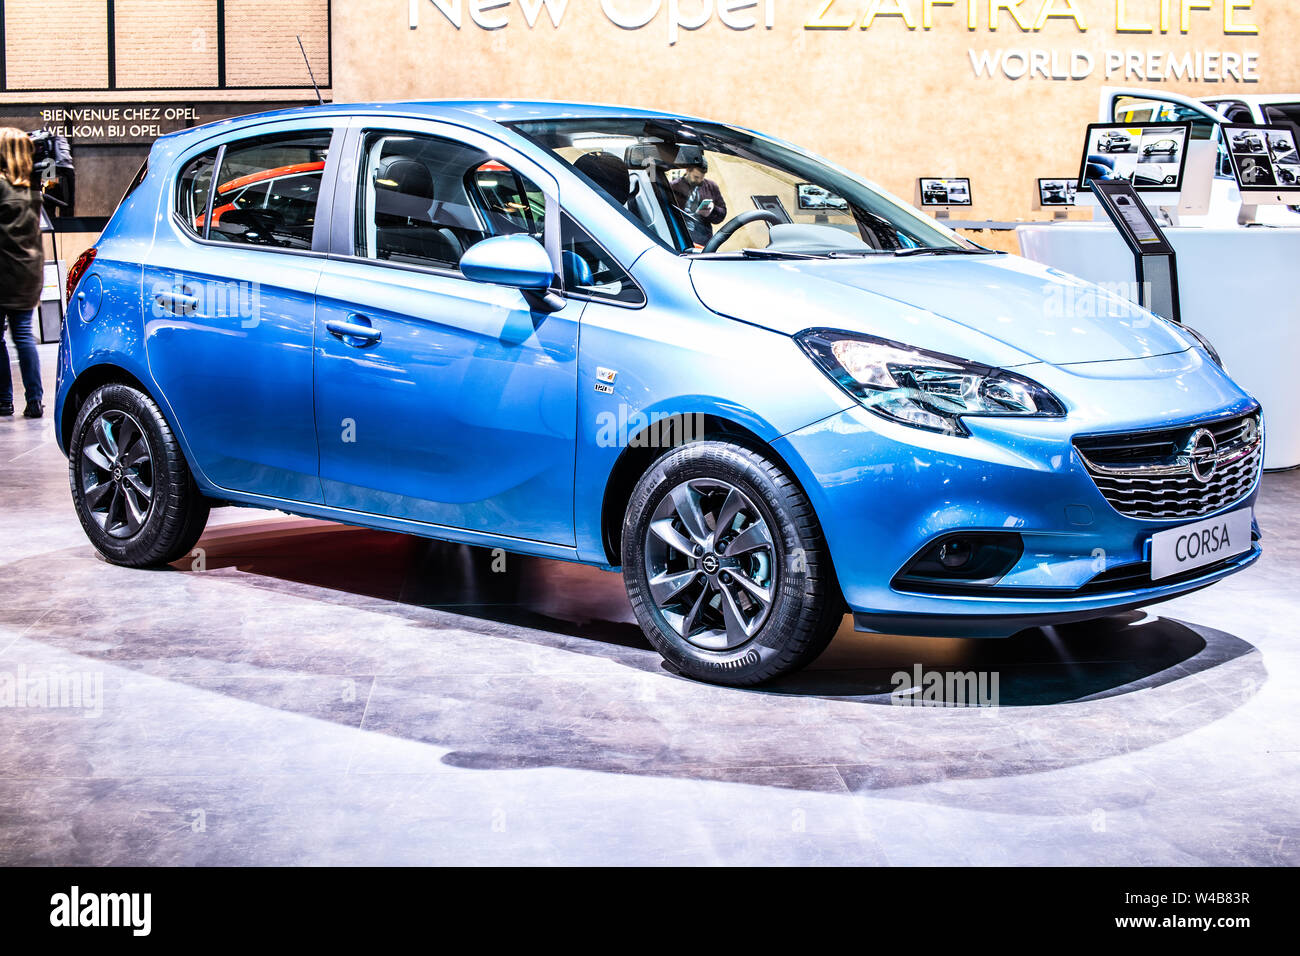 https://c8.alamy.com/comp/W4B83R/brussels-belgium-jan-2019-blue-opel-corsa-brussels-motor-show-corsa-e-fifth-generation-supermini-car-produced-by-opel-psa-group-W4B83R.jpg